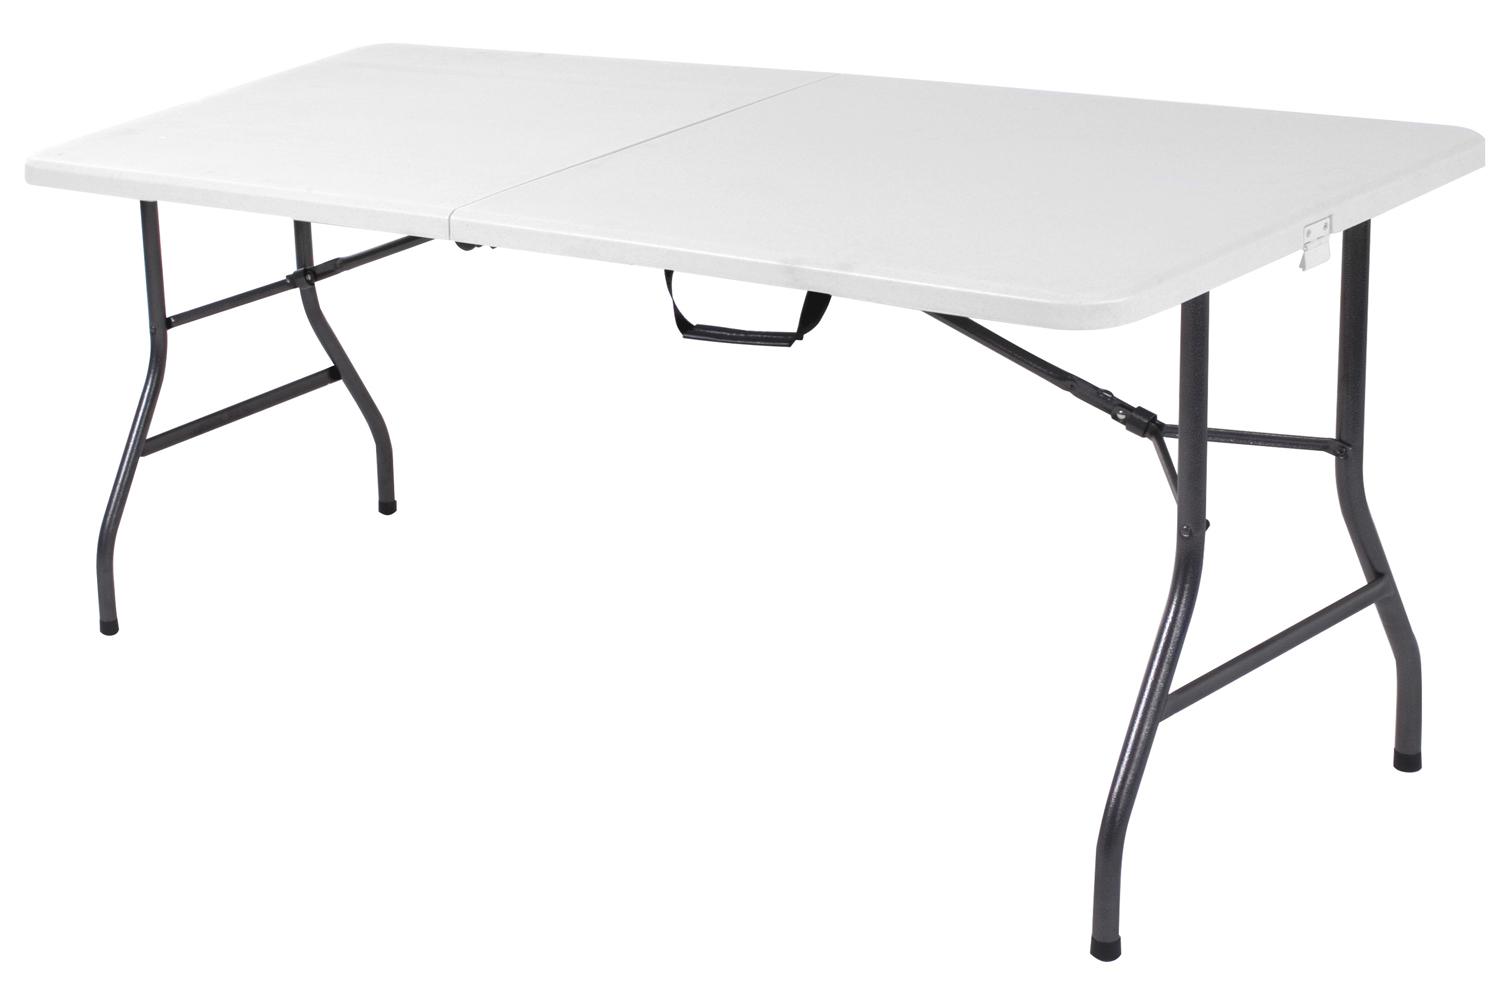 FOLDING TABLE
WHITE PLASTIC
TOP  1.8mtx700mm